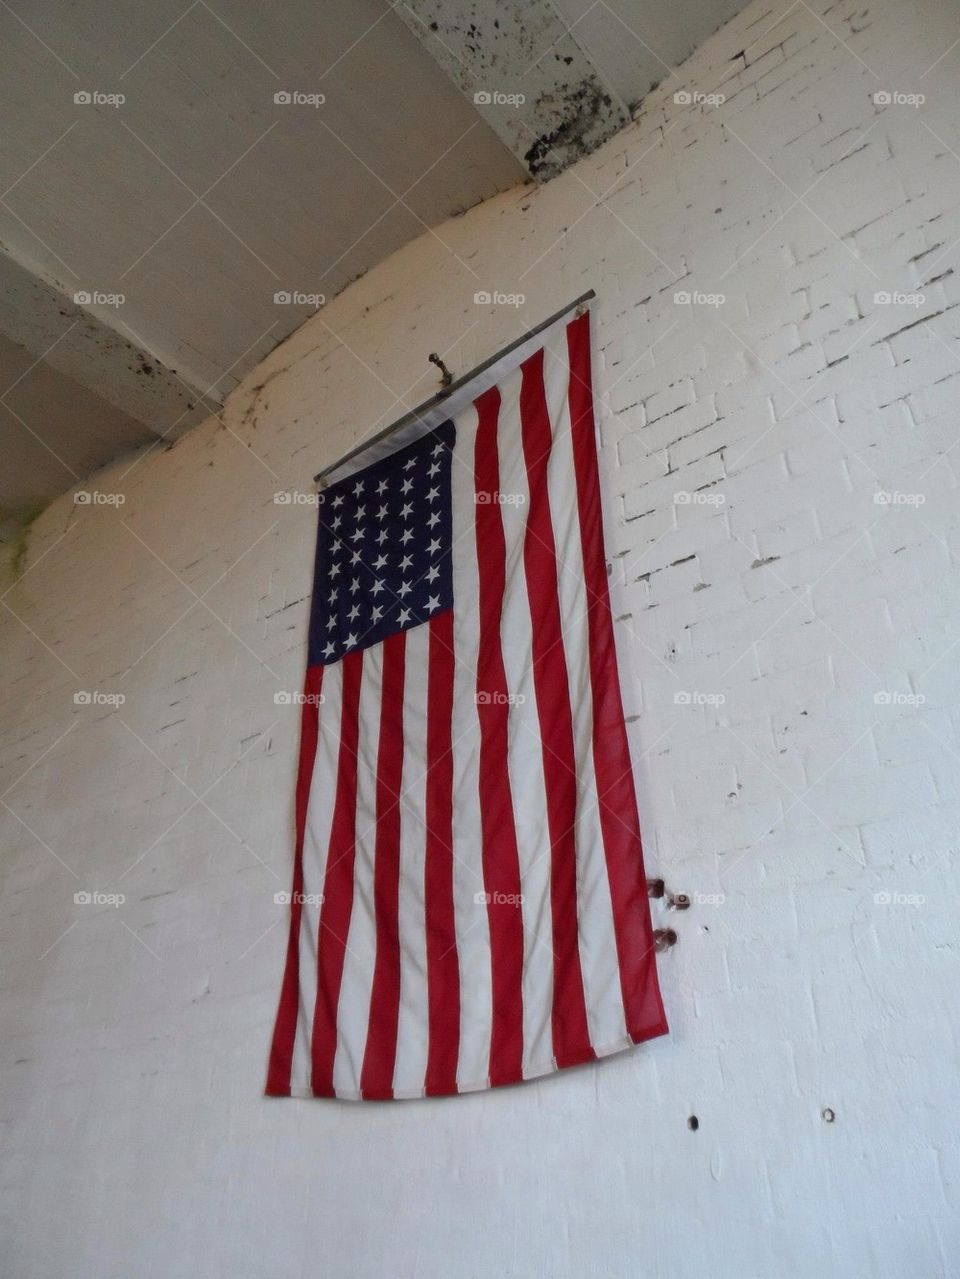 American flag, stars always hanging in the top left corner